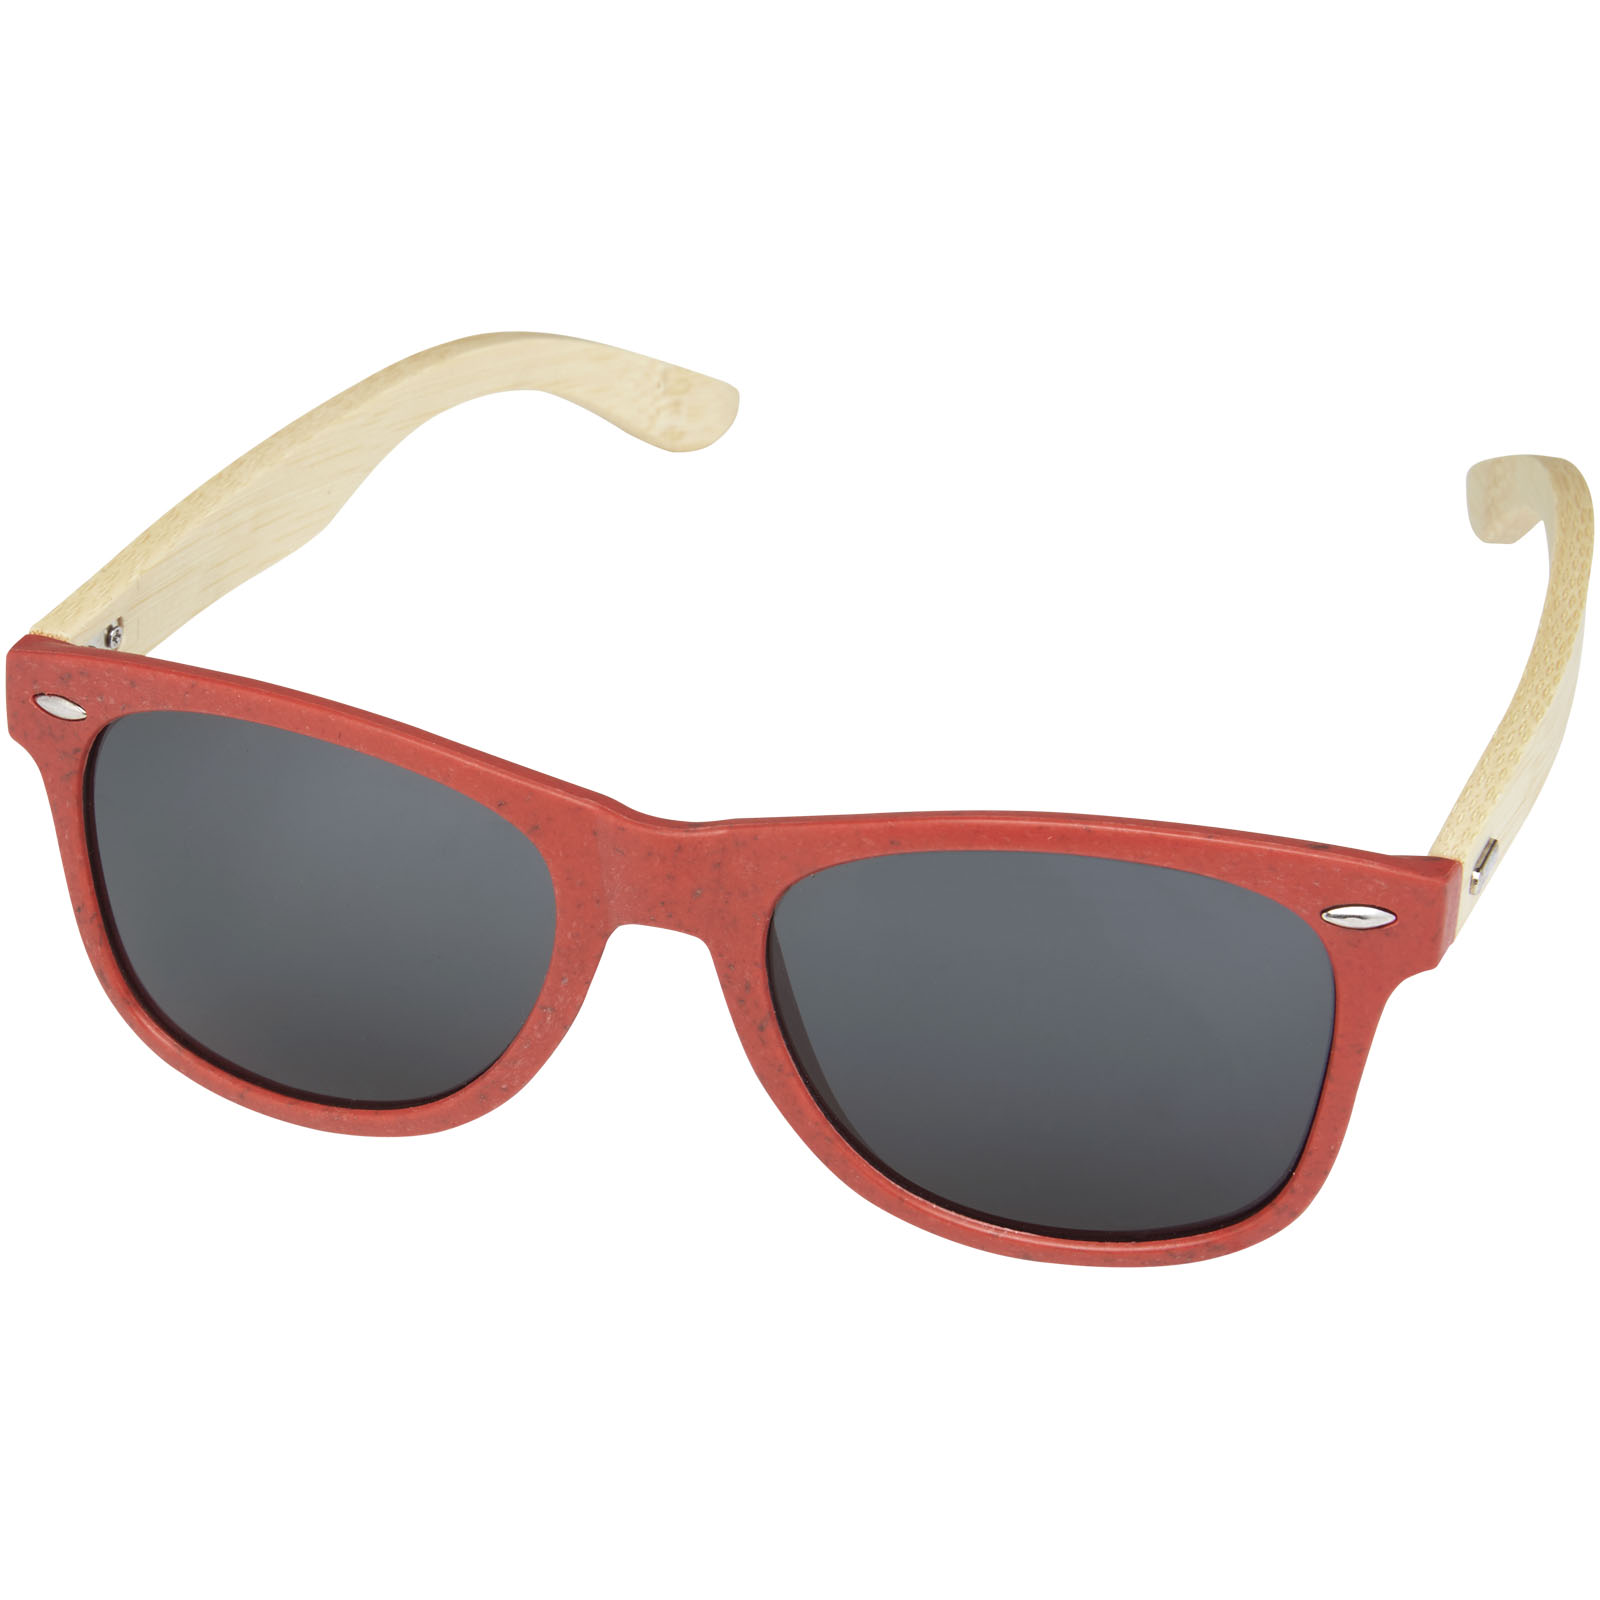 Advertising Sunglasses - Sun Ray bamboo sunglasses